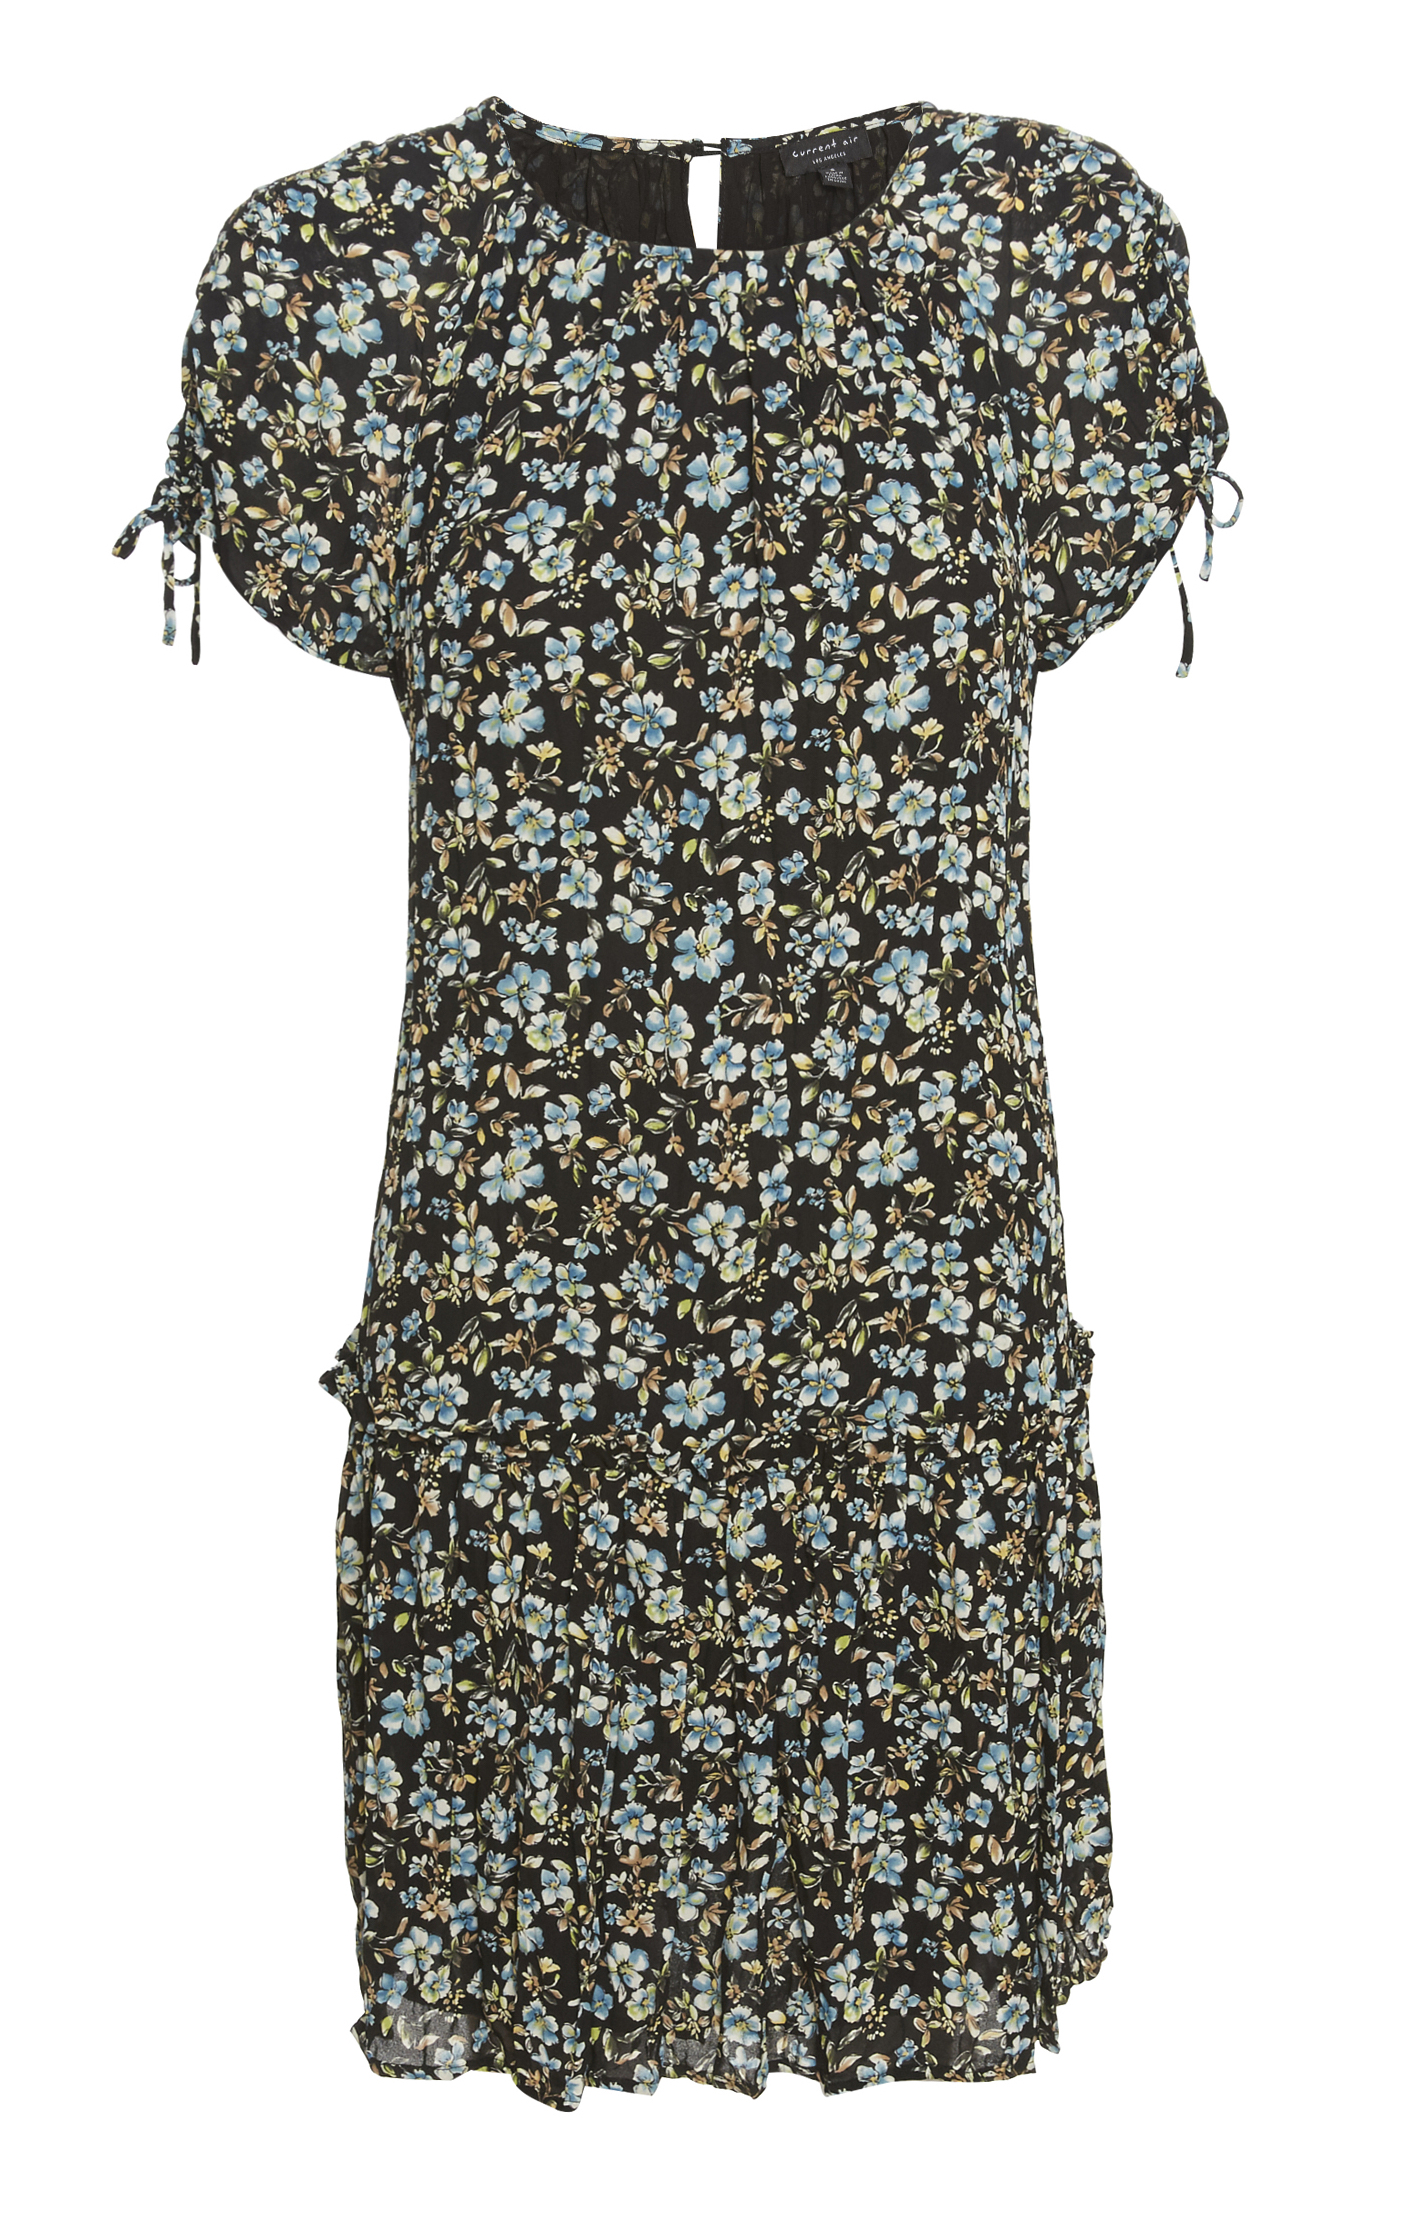 Ruffle Detail Floral Dress